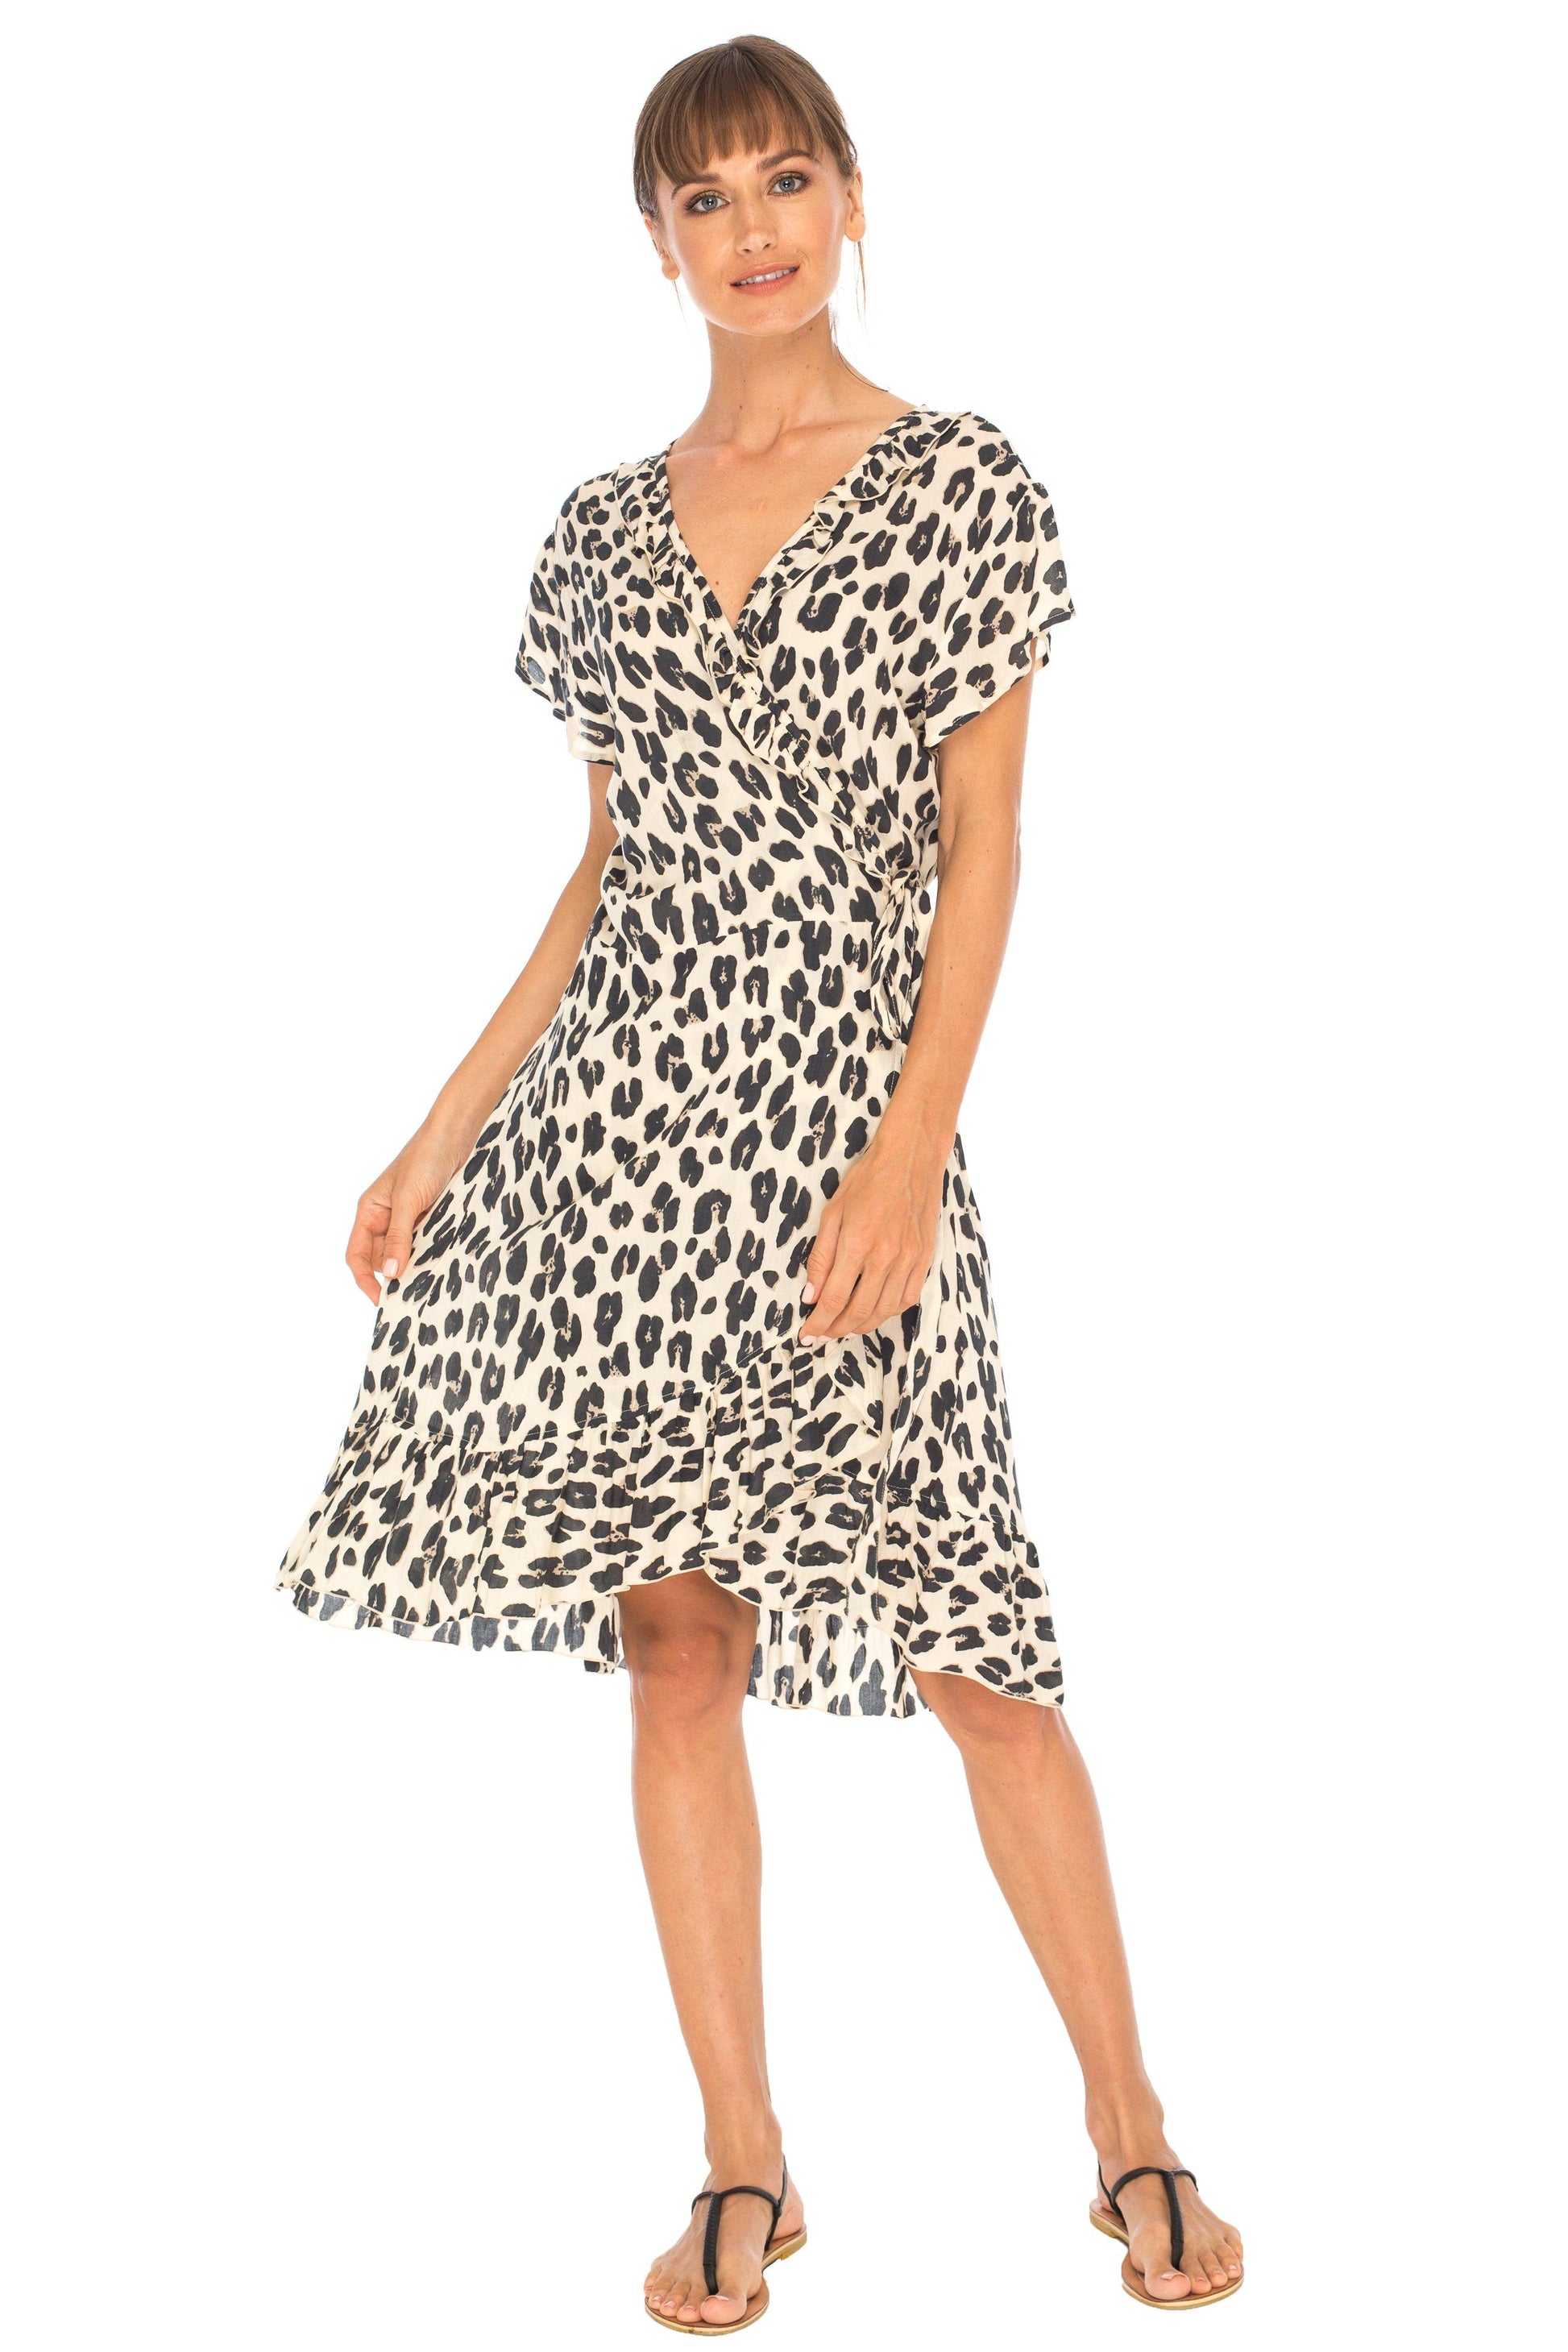 Flowy Short Leopard Print Wrap Dress with Cap Sleeves - Love-Shu-Shi